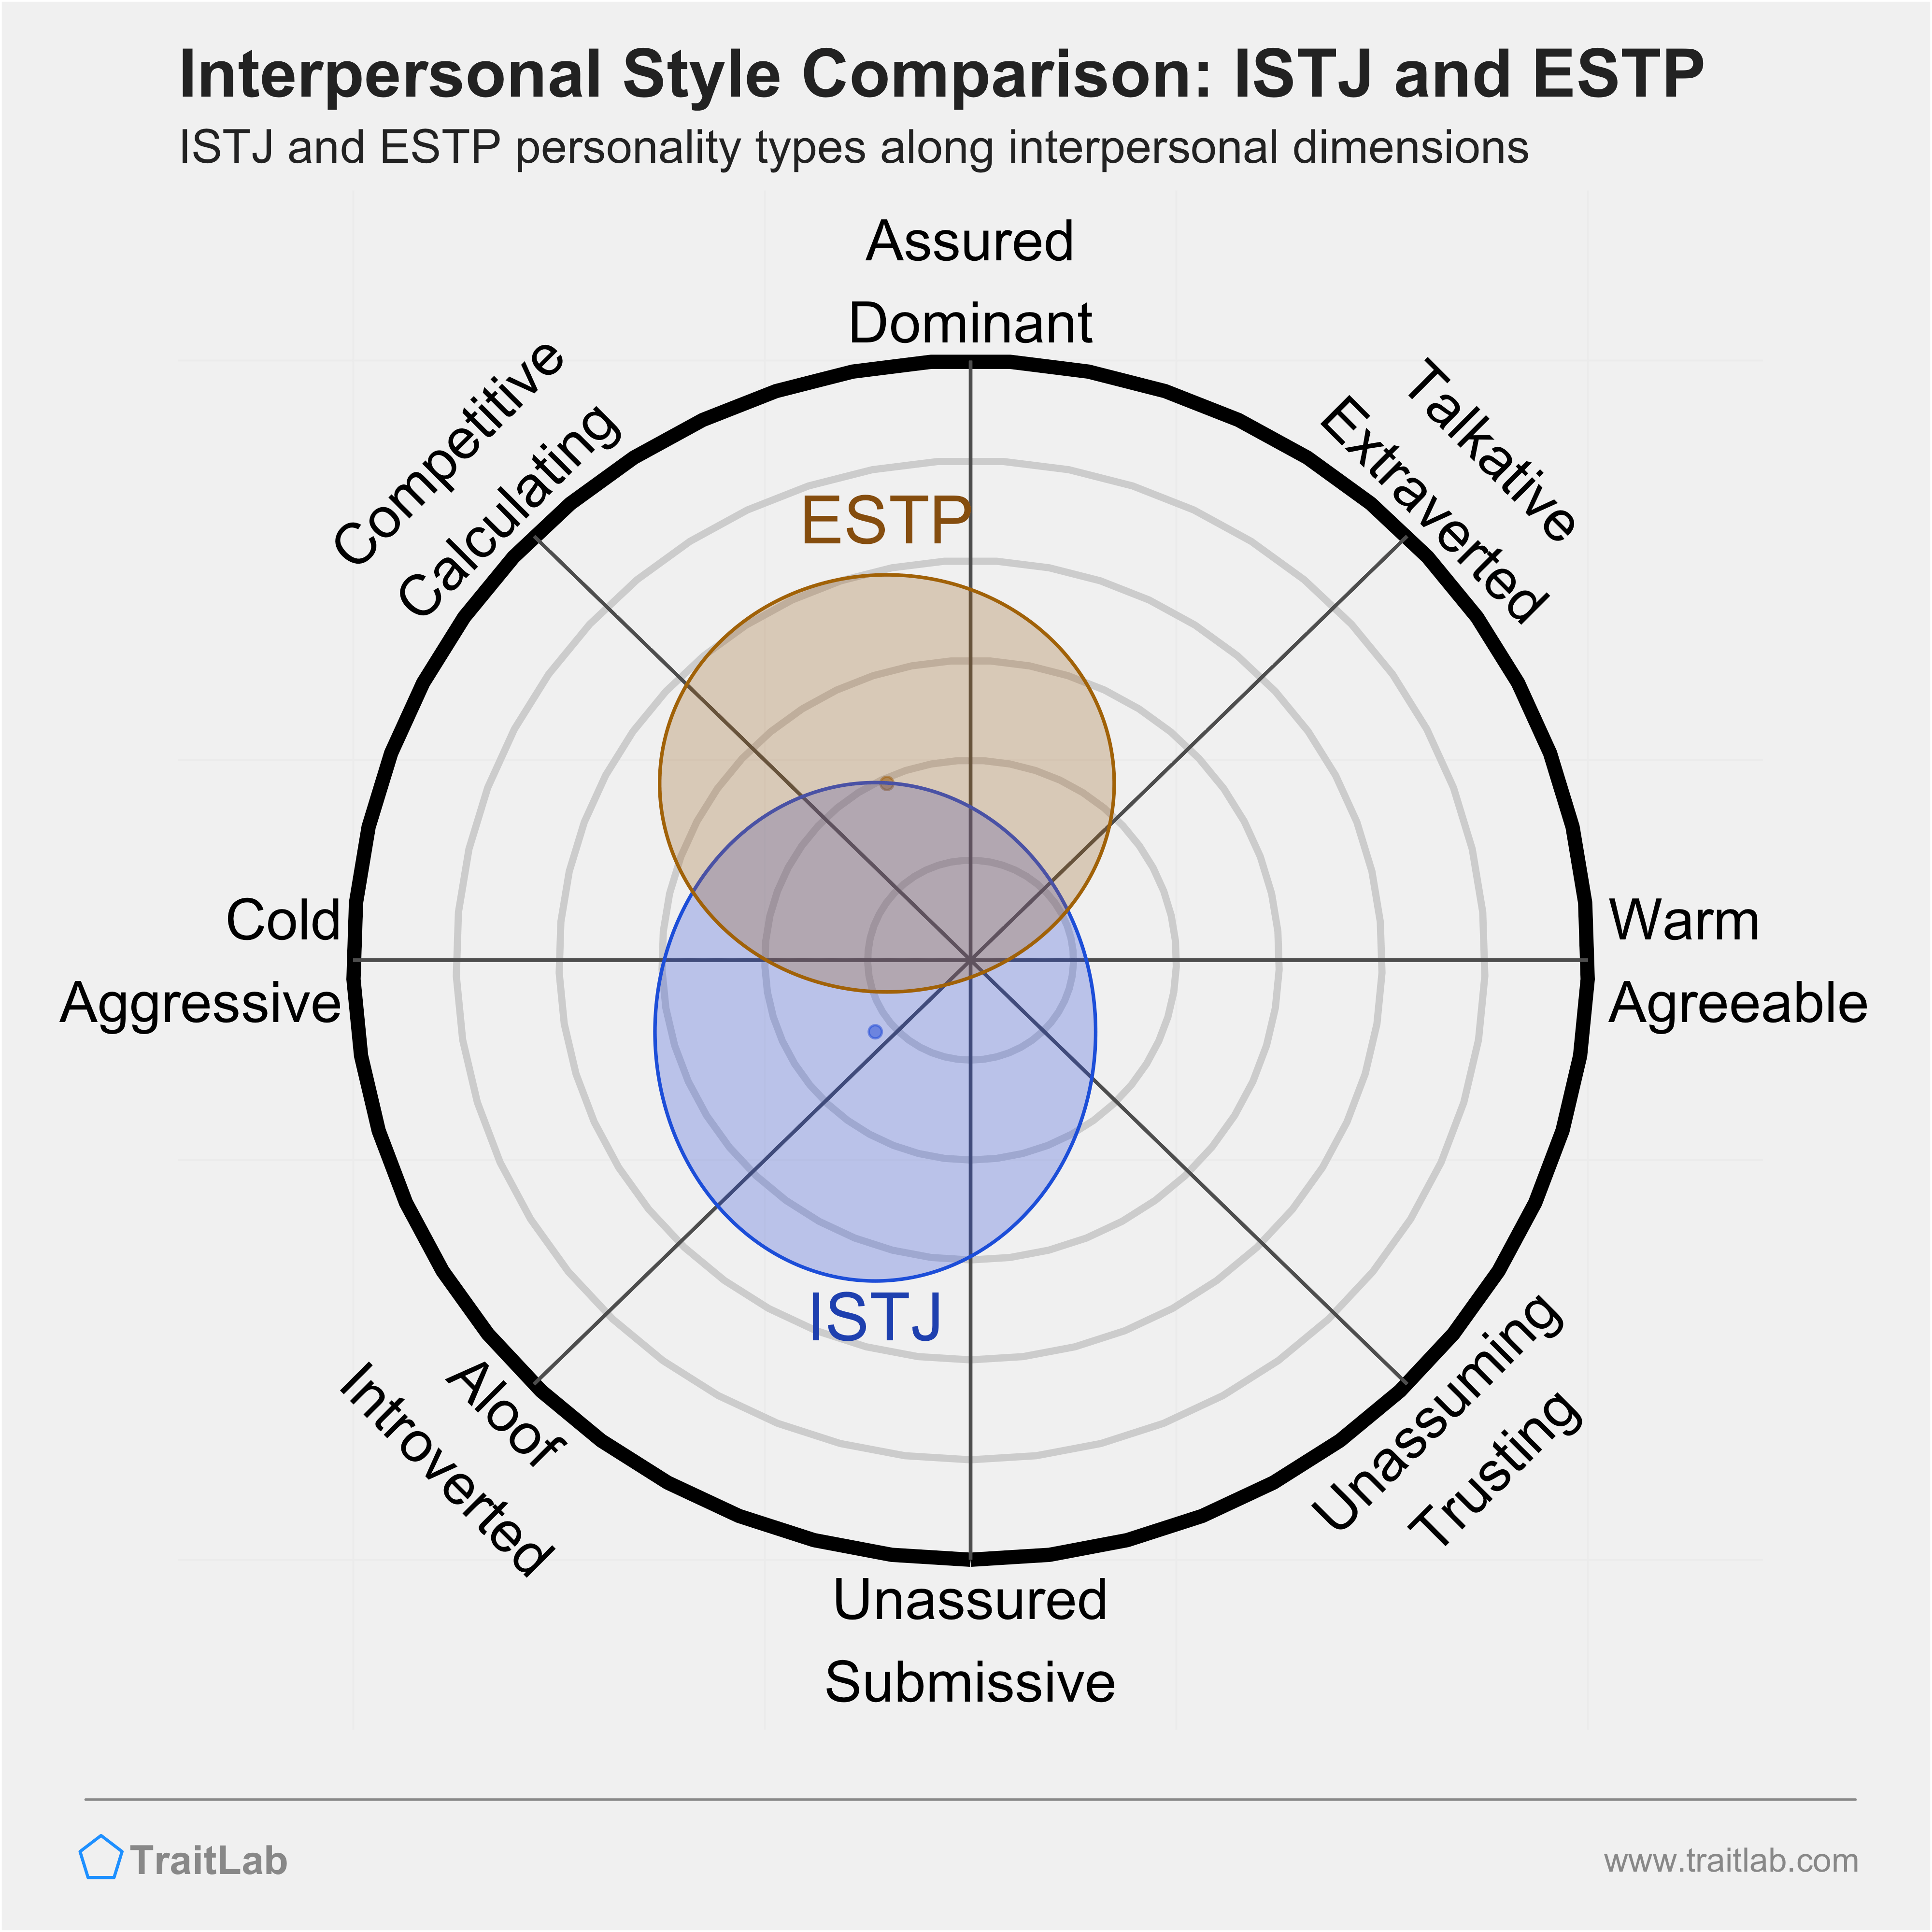 ISTJ and ESTP comparison across interpersonal dimensions